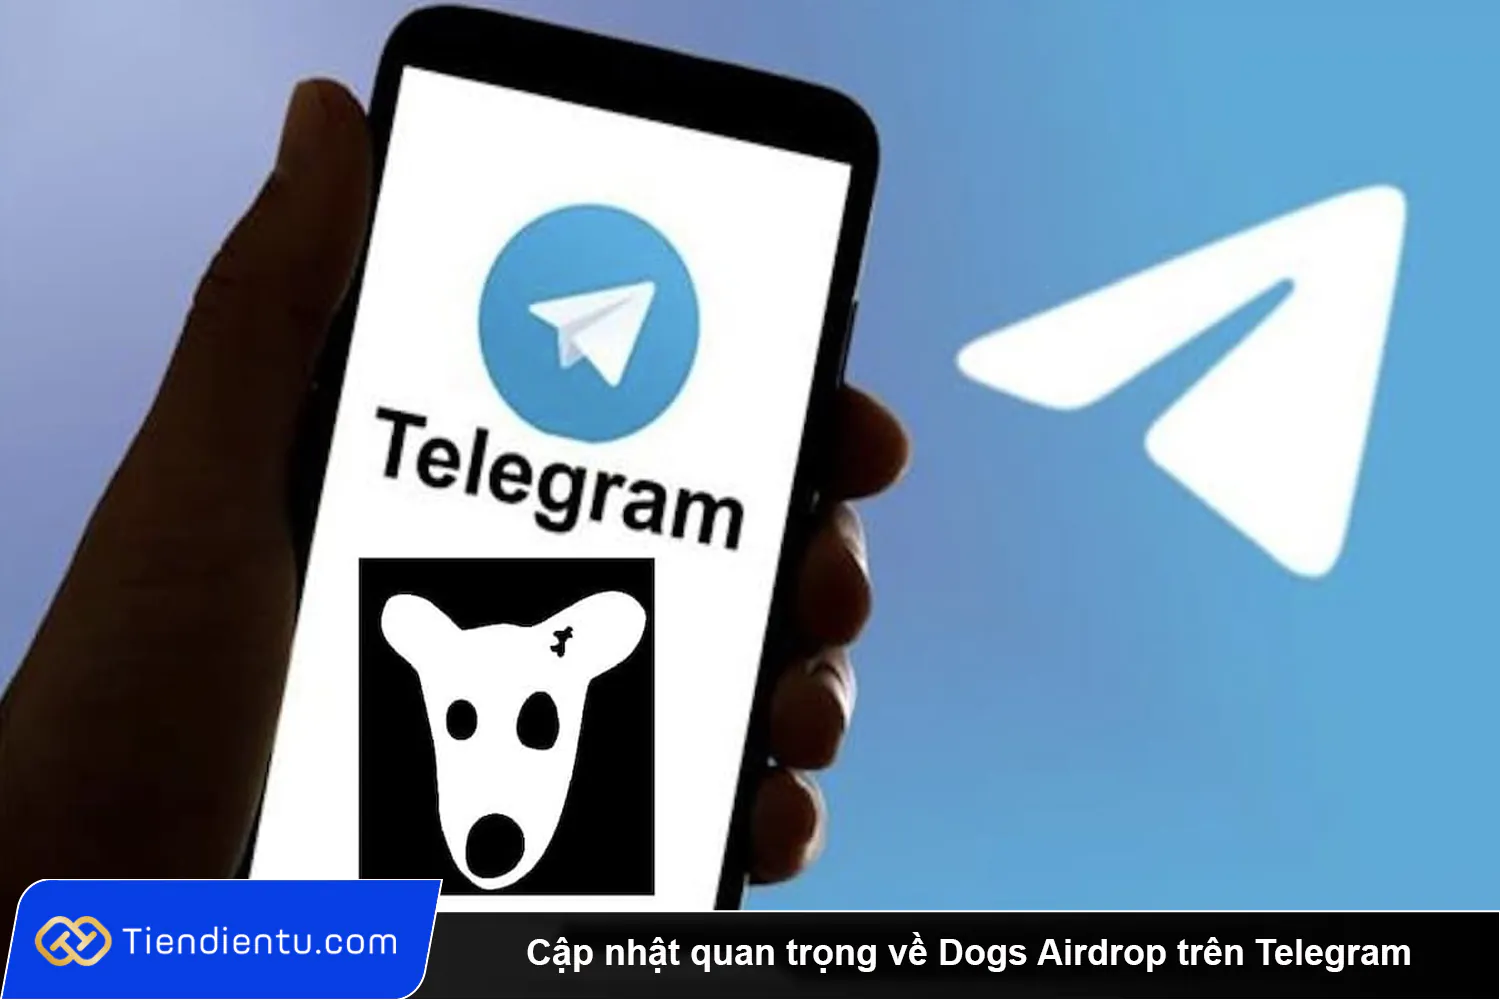 Cap nhat quan trong ve Dogs Airdrop tren Telegram